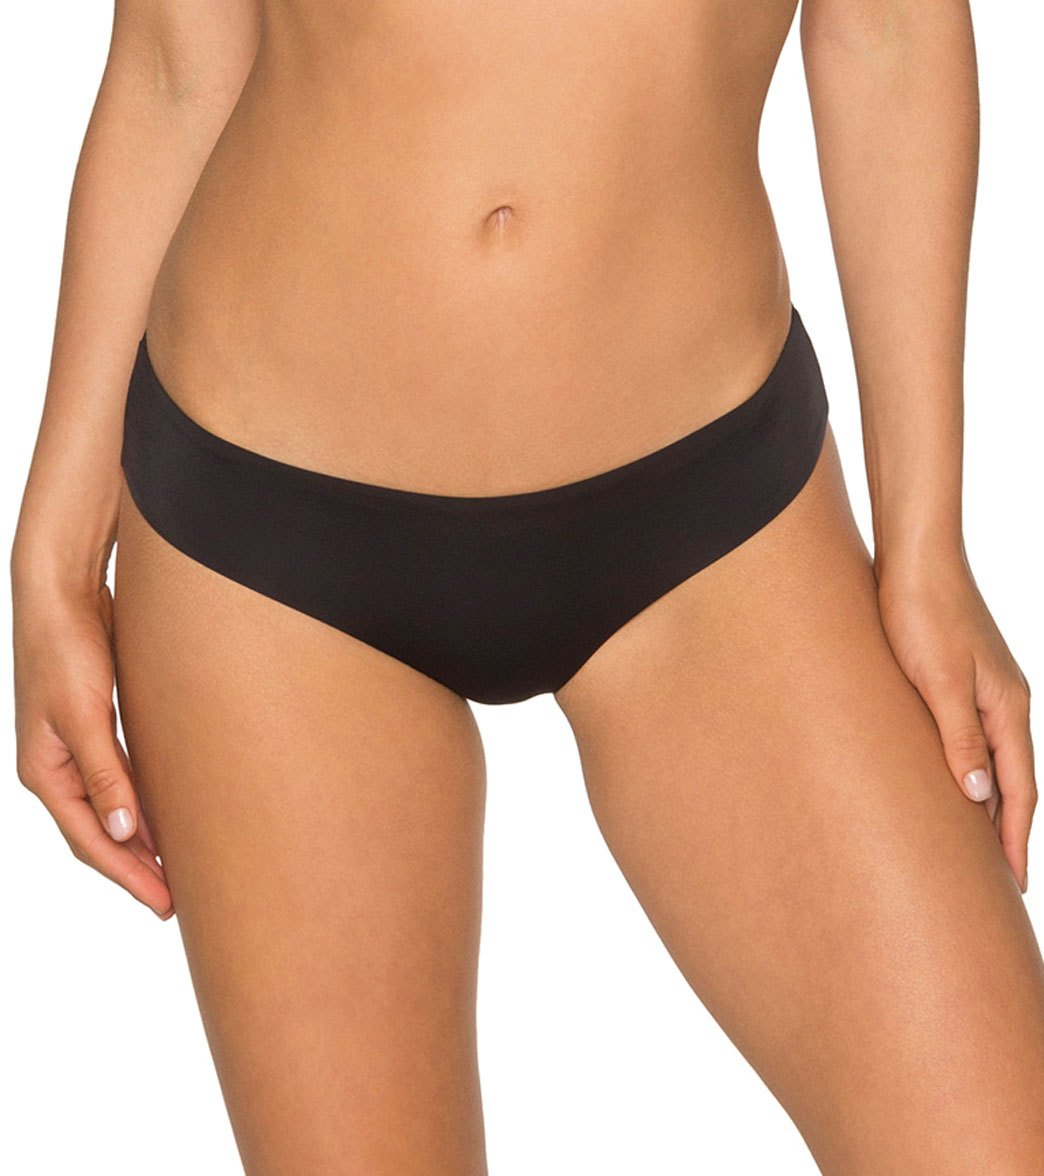 Aerin Rose Solid Zuel Bikini Bottom - Obsidian X-Small - Swimoutlet.com